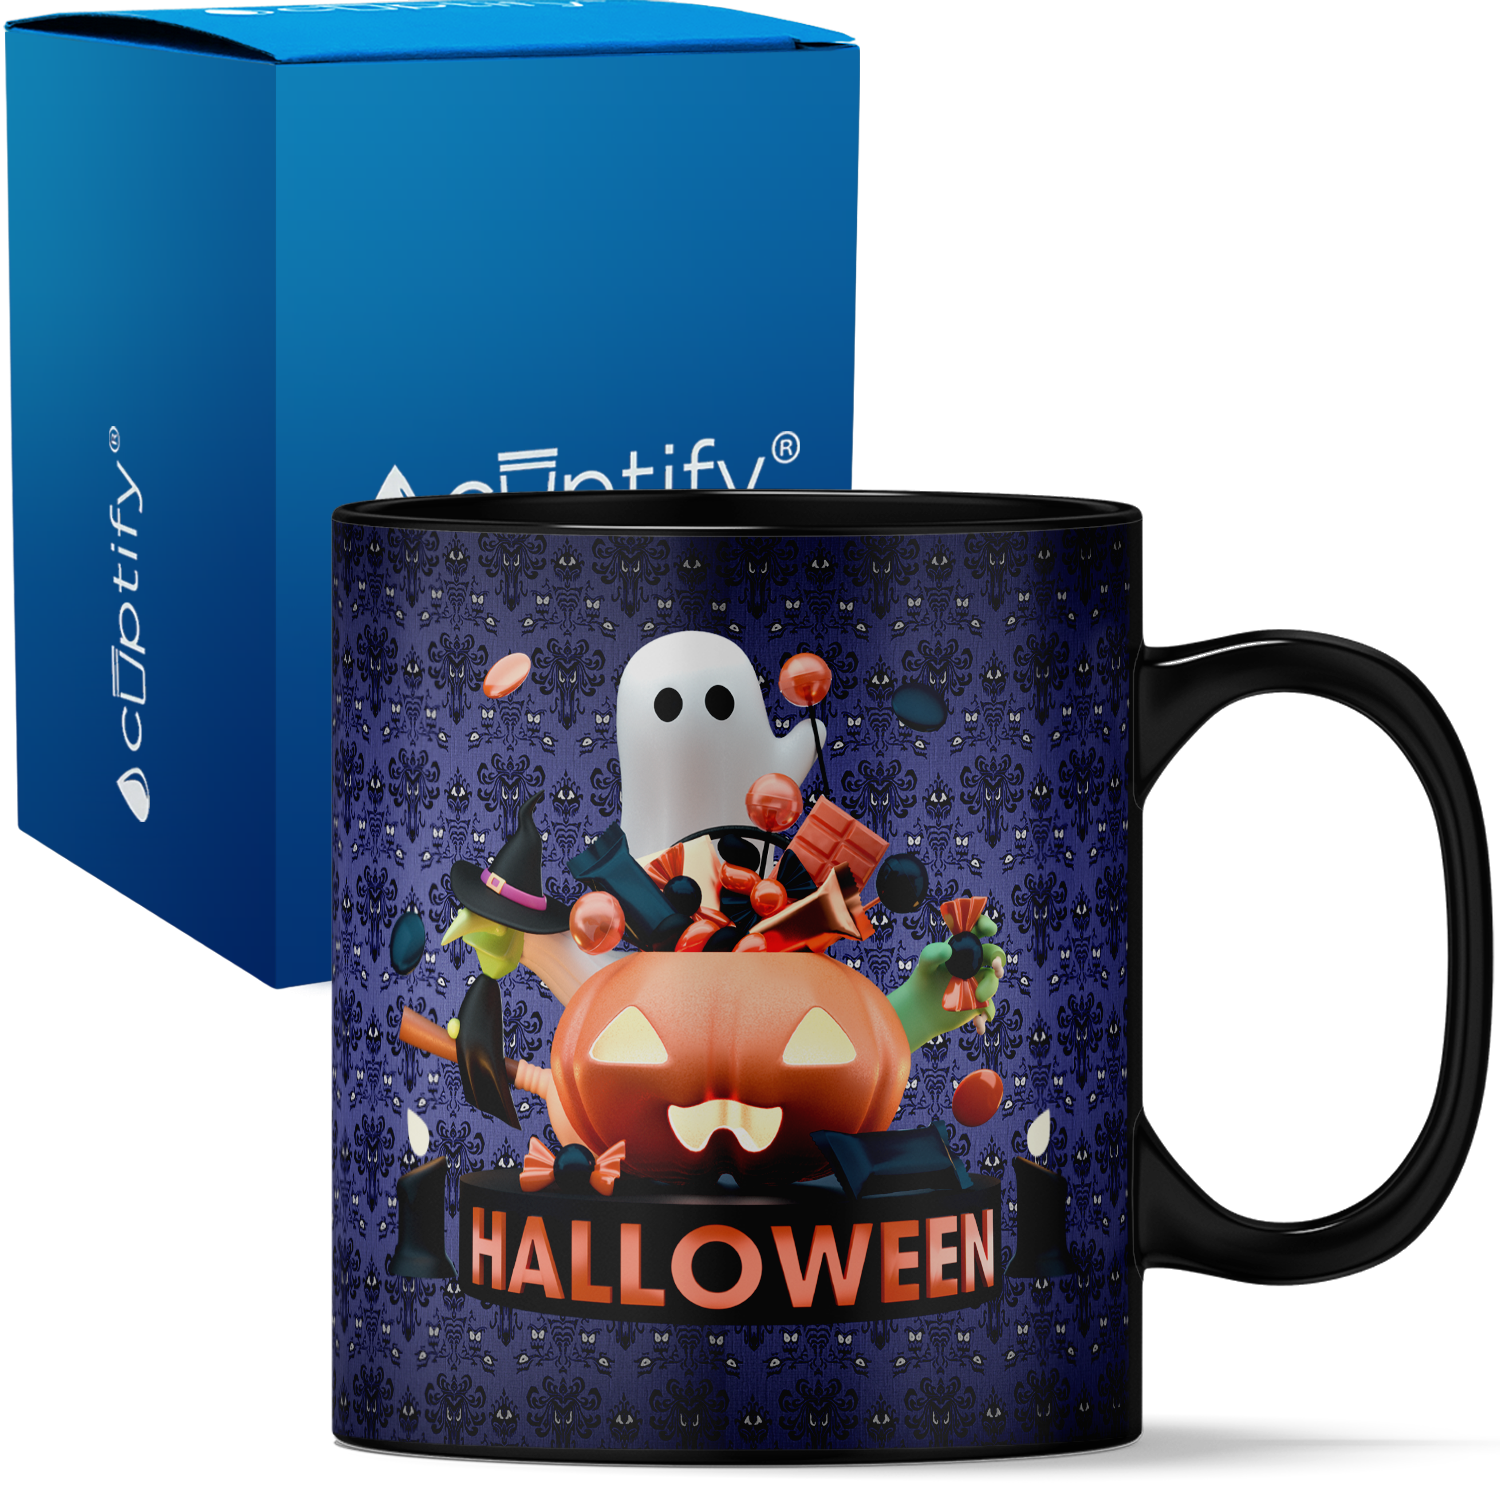 Halloween Candy Ghost on 11oz Ceramic Black Coffee Mug